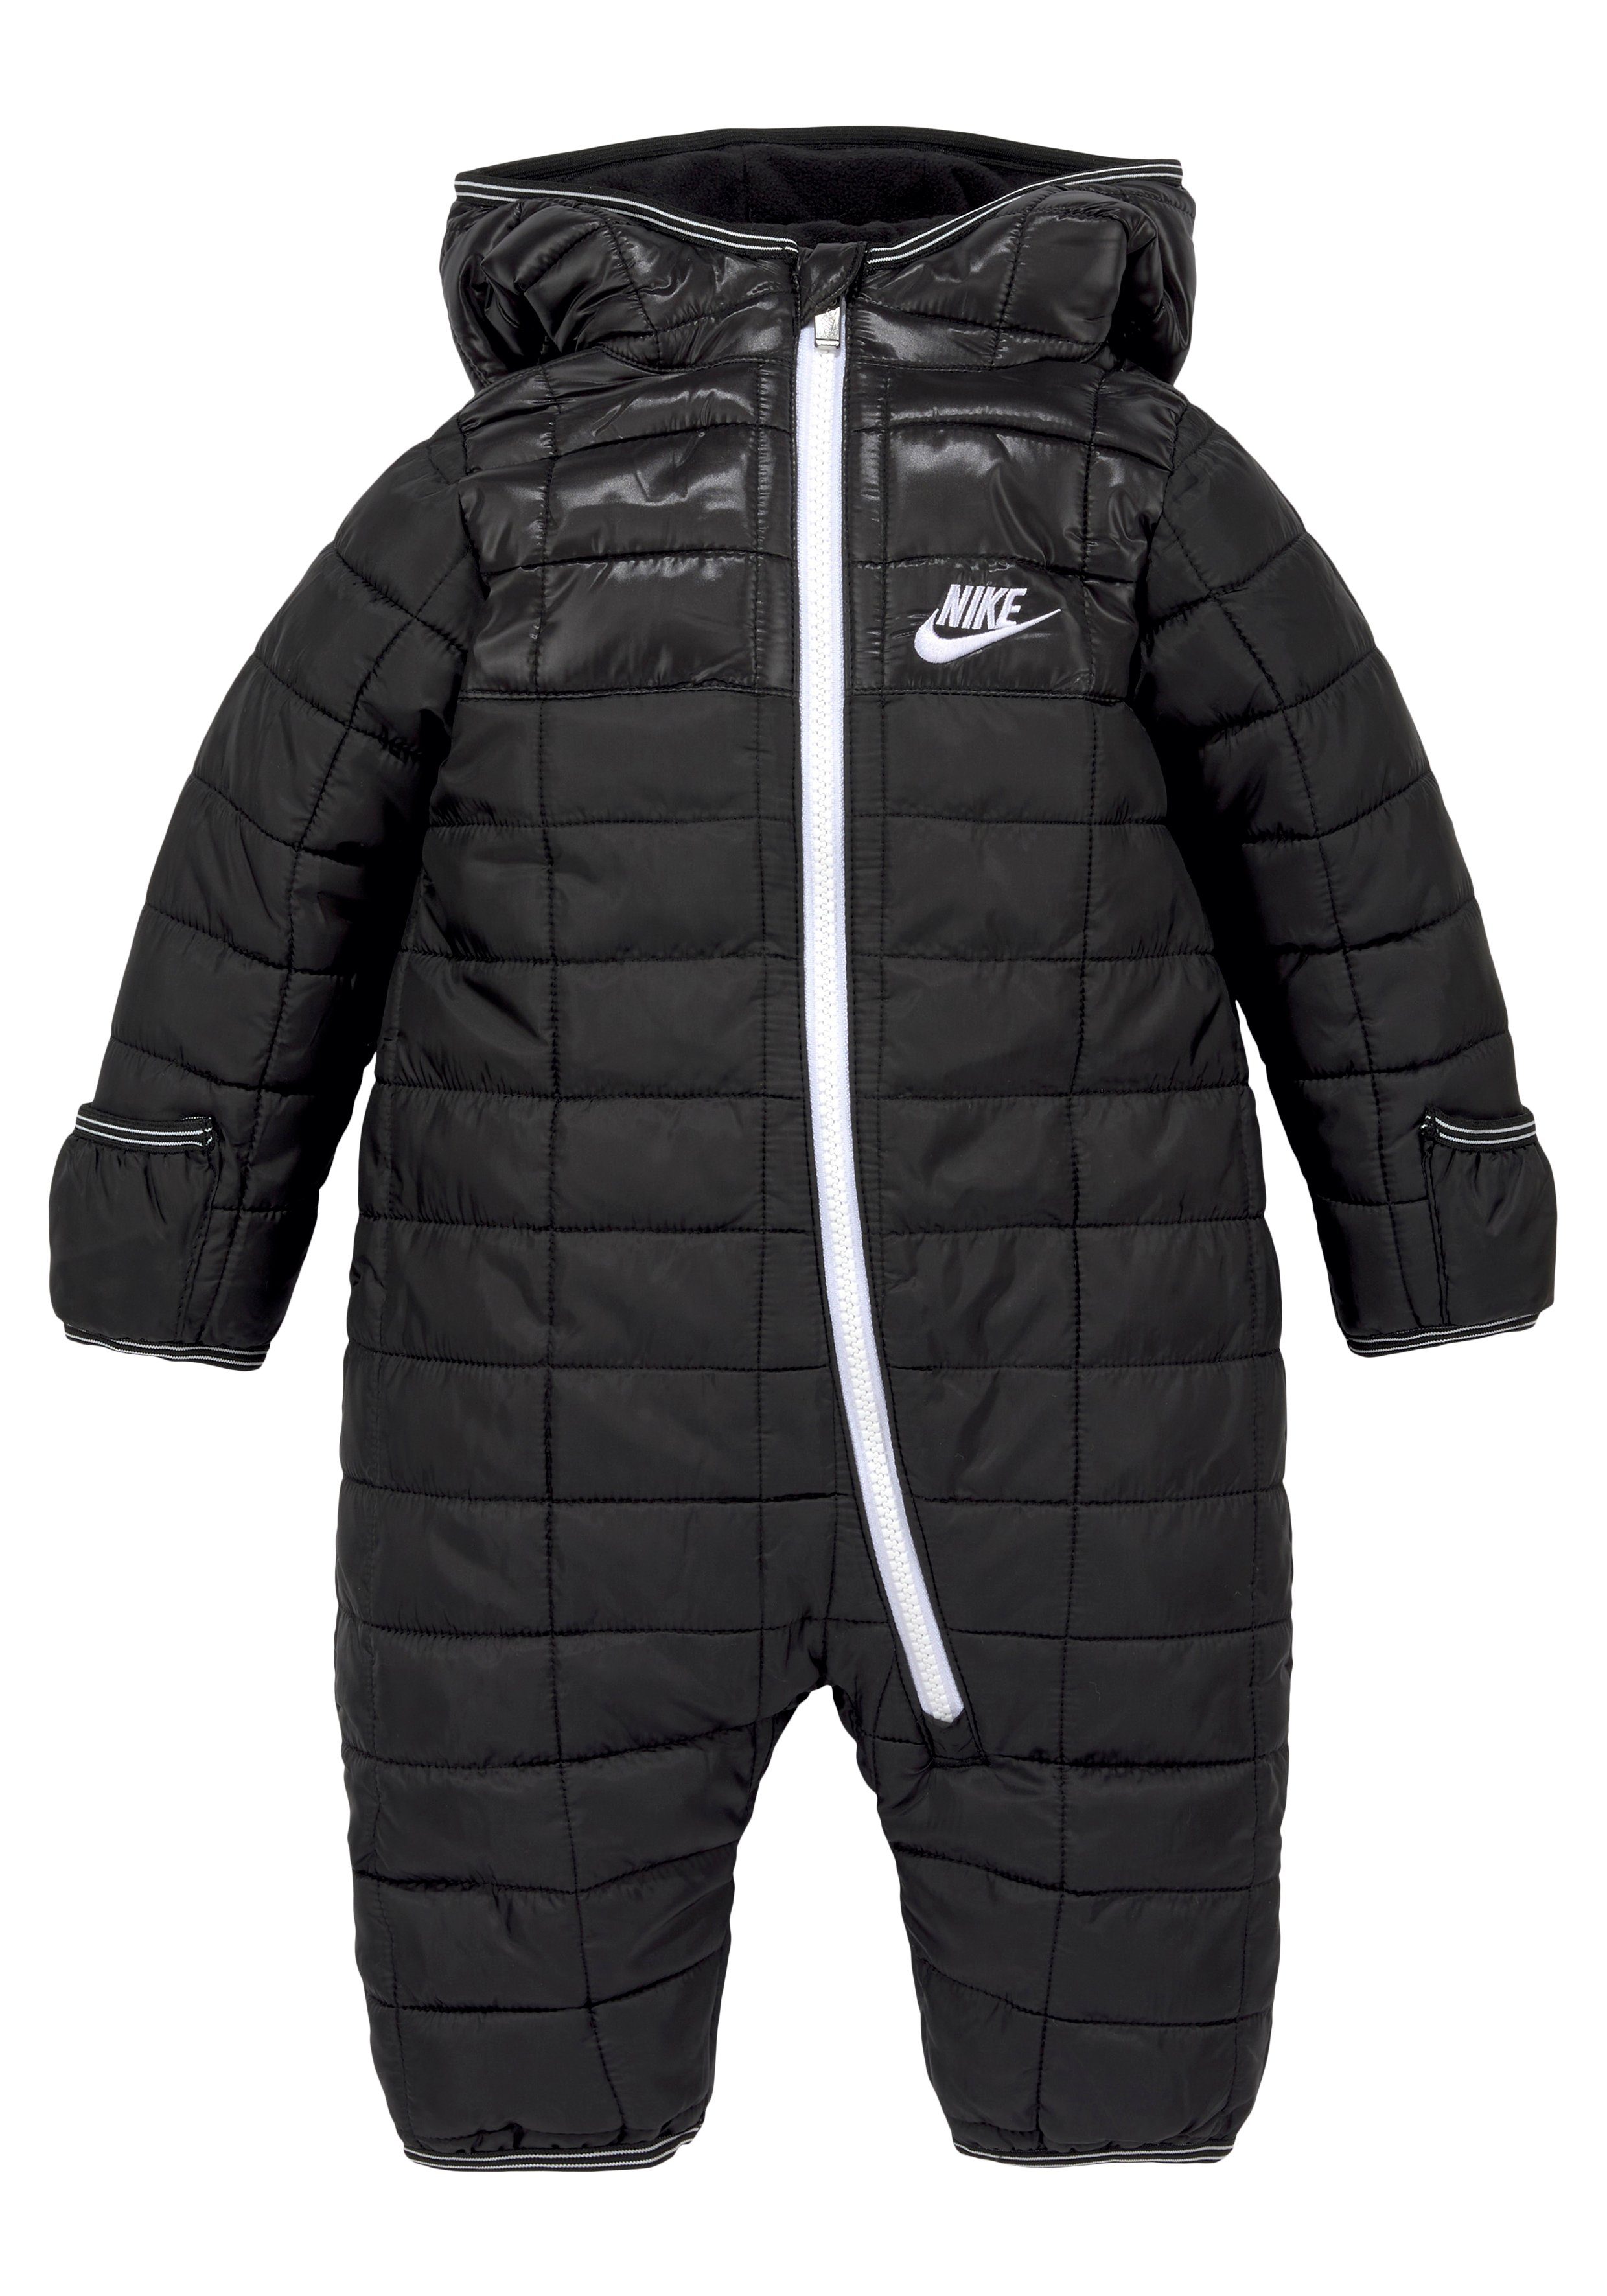 Schneeoverall COLORBLOCK Sportswear SNOWSUIT Nike schwarz